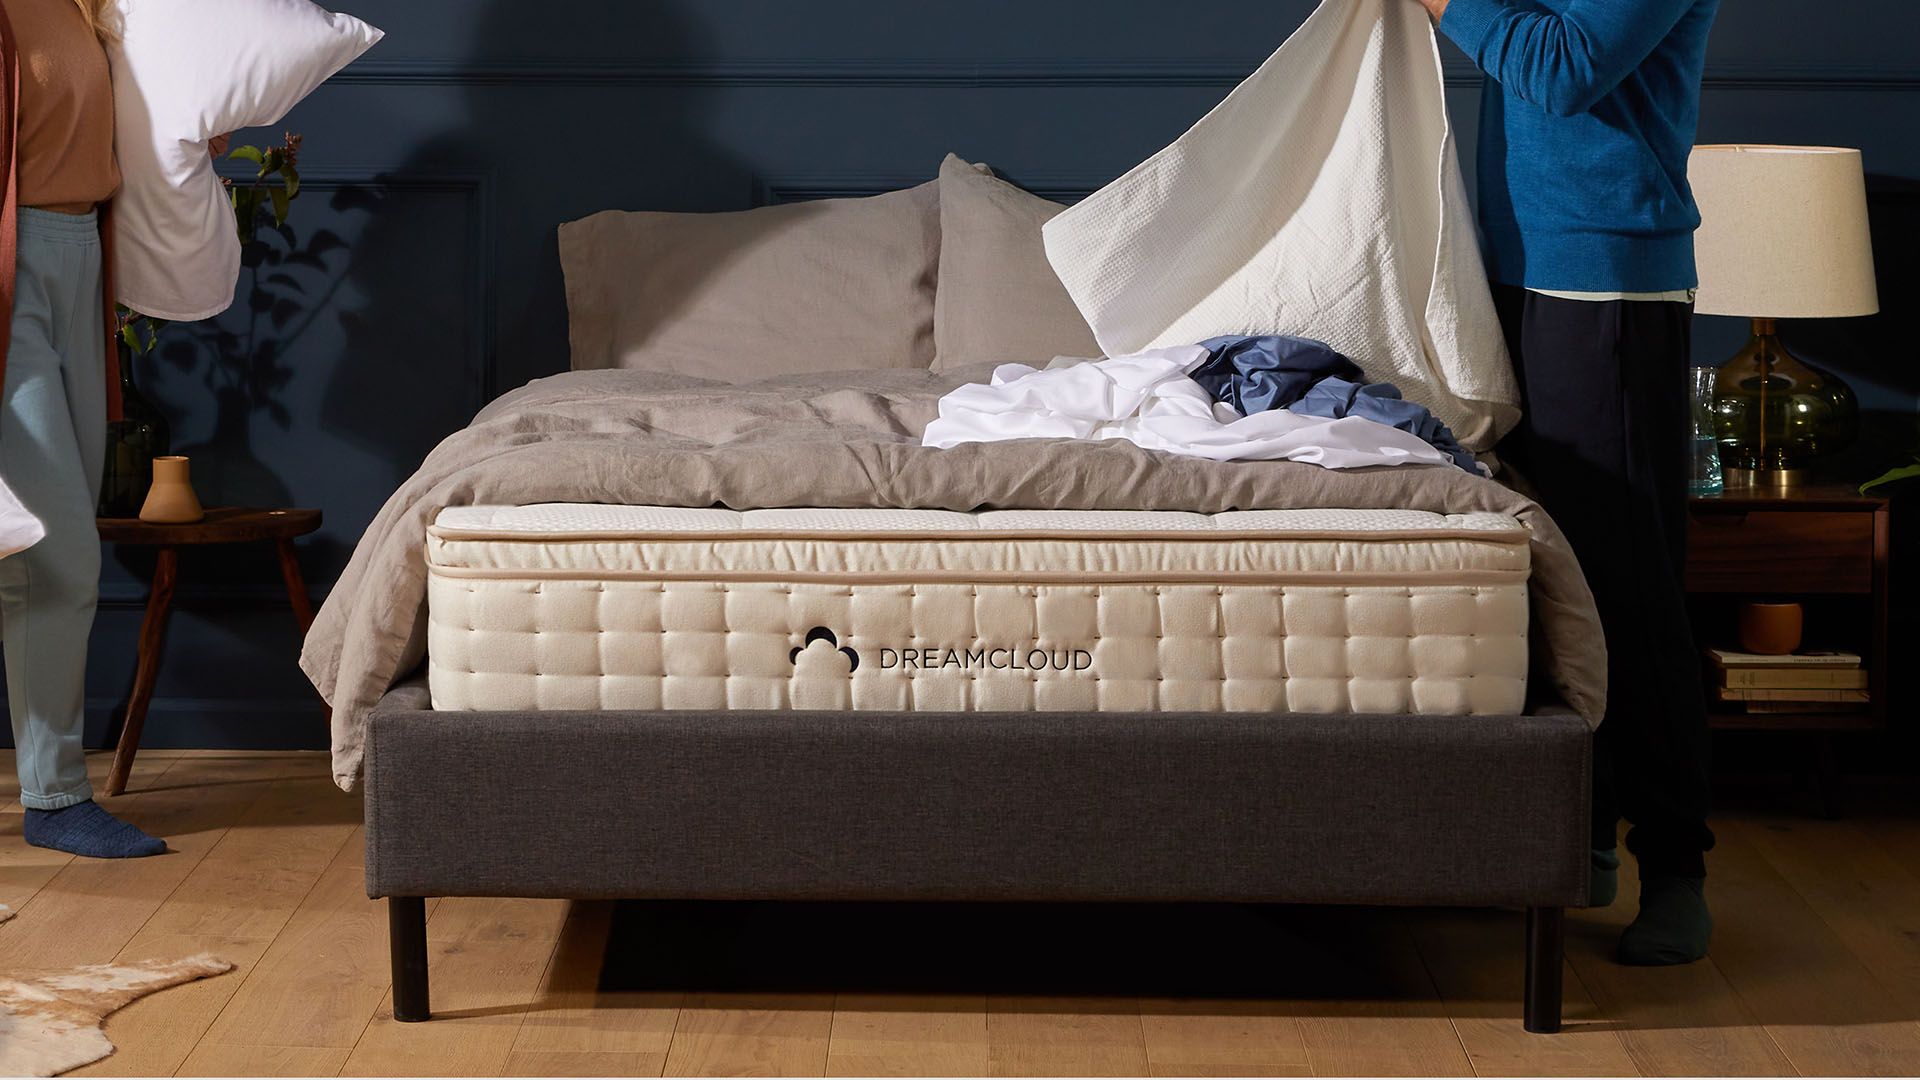 dreamcloud luxury hybrid mattress uk